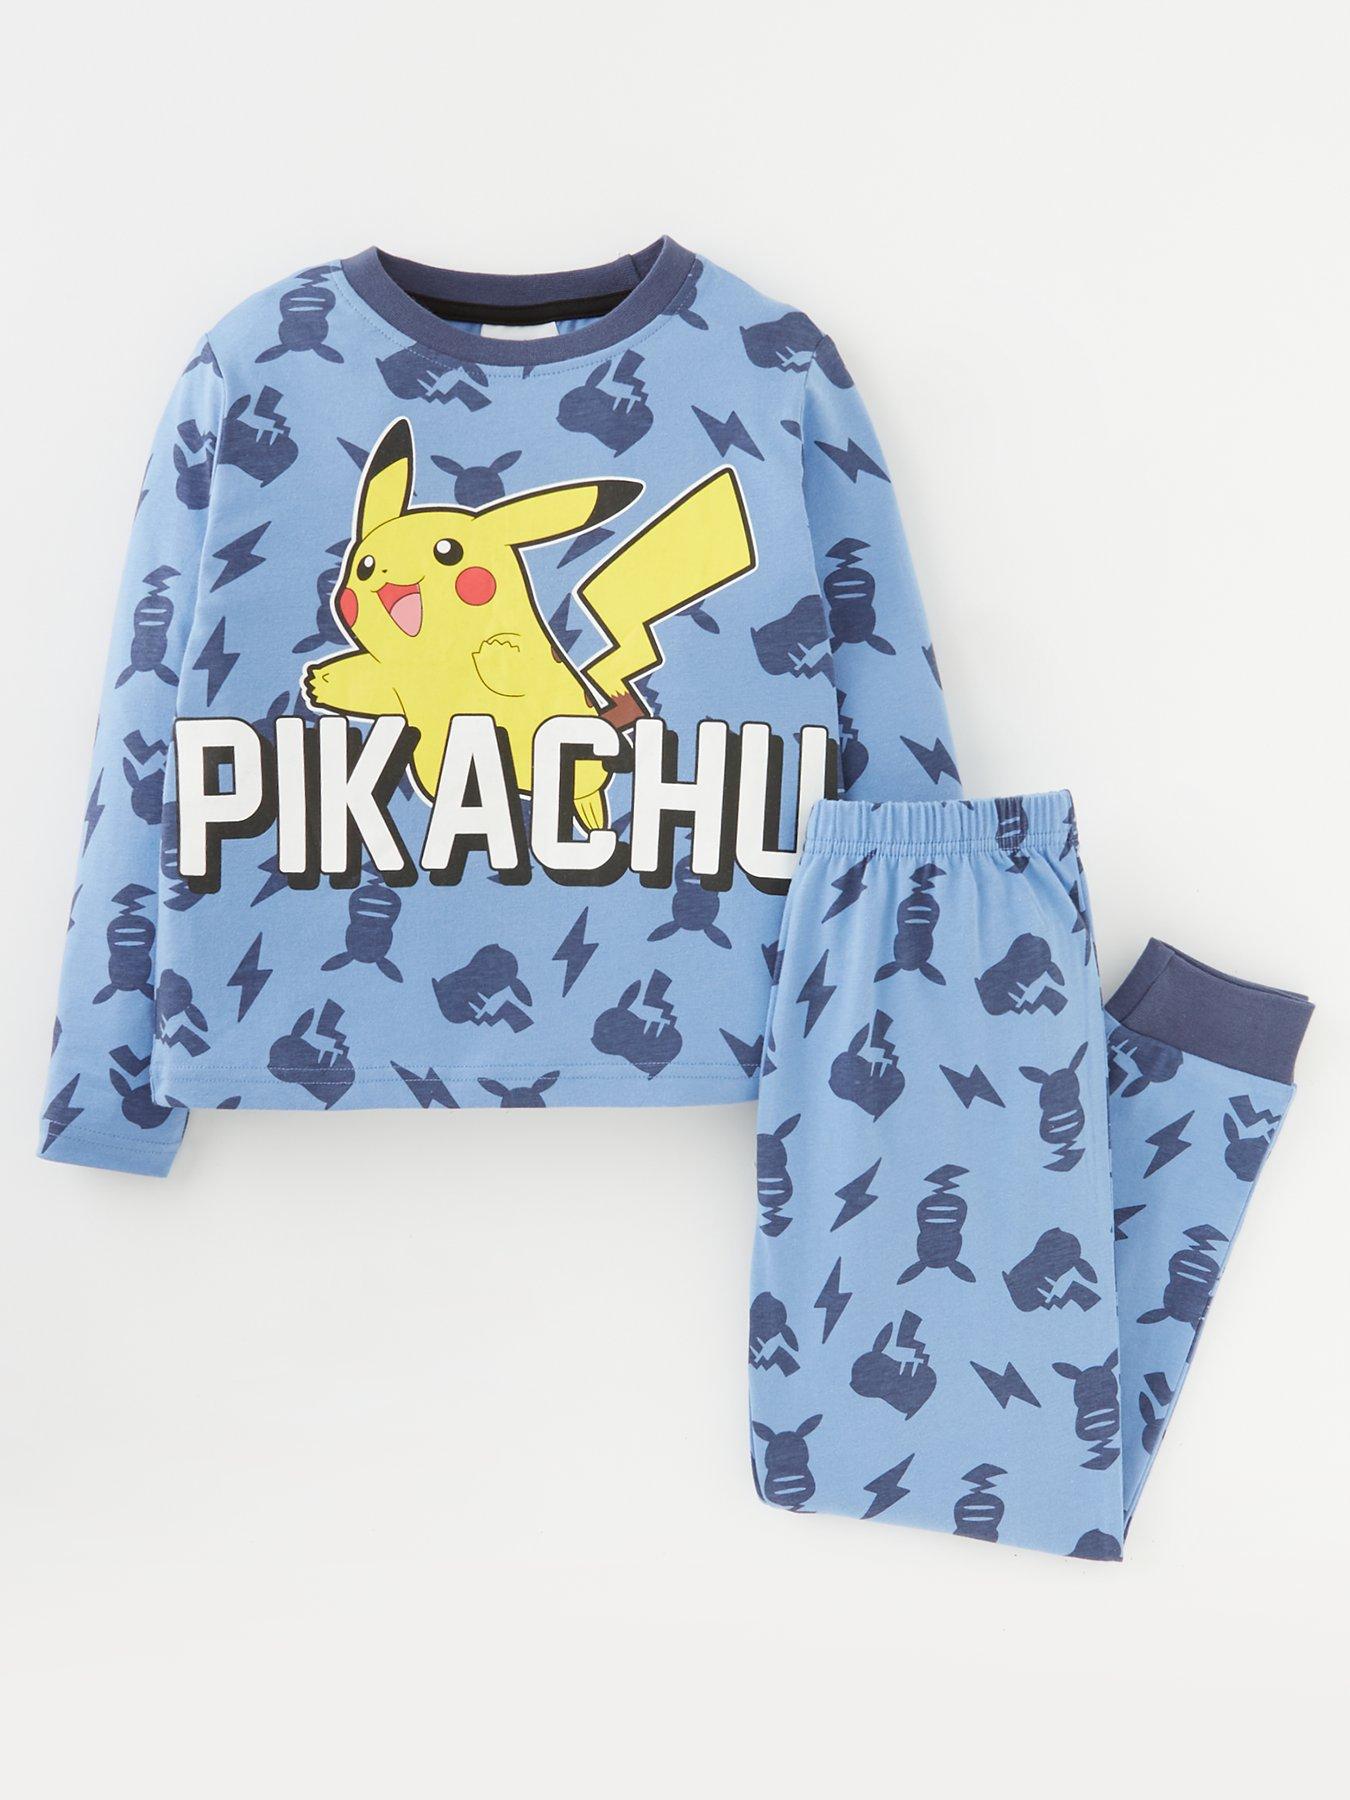 School Boys PJs Official Merchandise Childrens Clothes Pokemon Pikachu I Choose You Boys Long Pyjamas Set Boys Pokemon Gifts Kids Birthday Gift Idea 